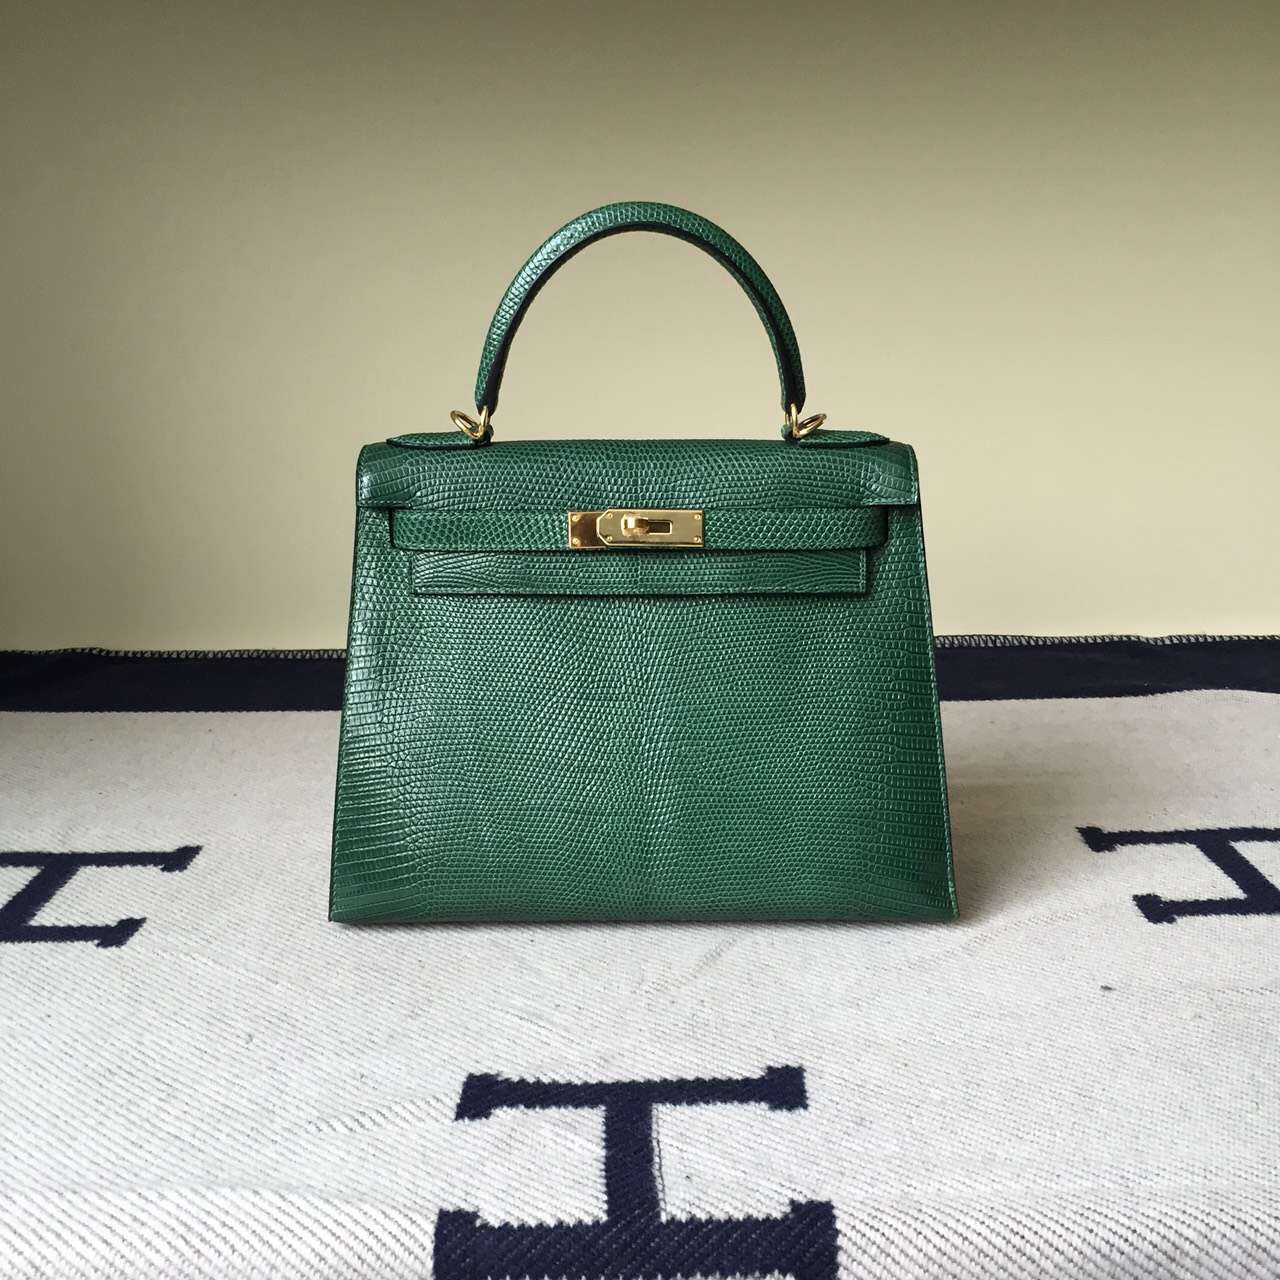 Fashion Hermes Bag Lizard Skin Leather Sellier Kelly28cm in CK67 Emerald Green